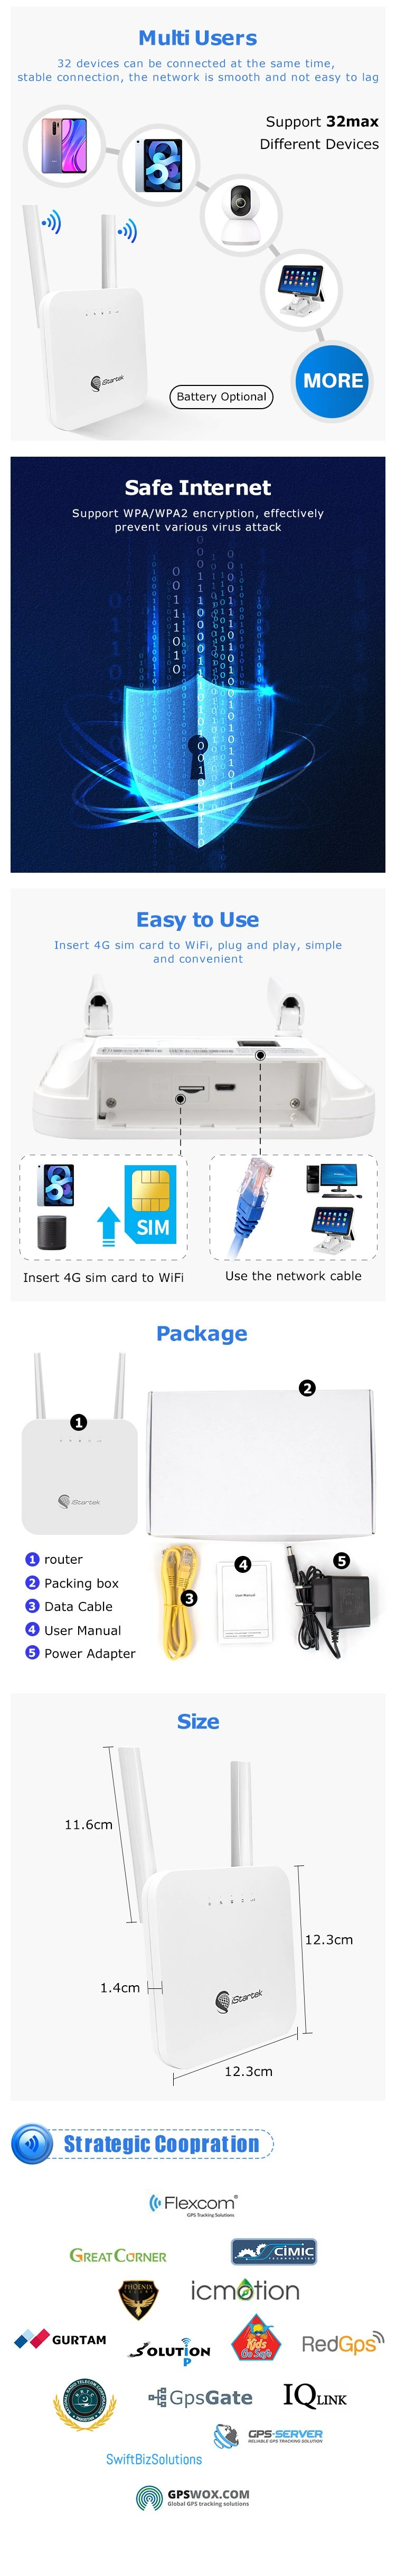 WiFi Internet VPN Wan Wi-Fi 5g LTE 4G Broadband 300 Mbps SIM Card Modem B525 Wi Fi Router with Simcard for Huawei